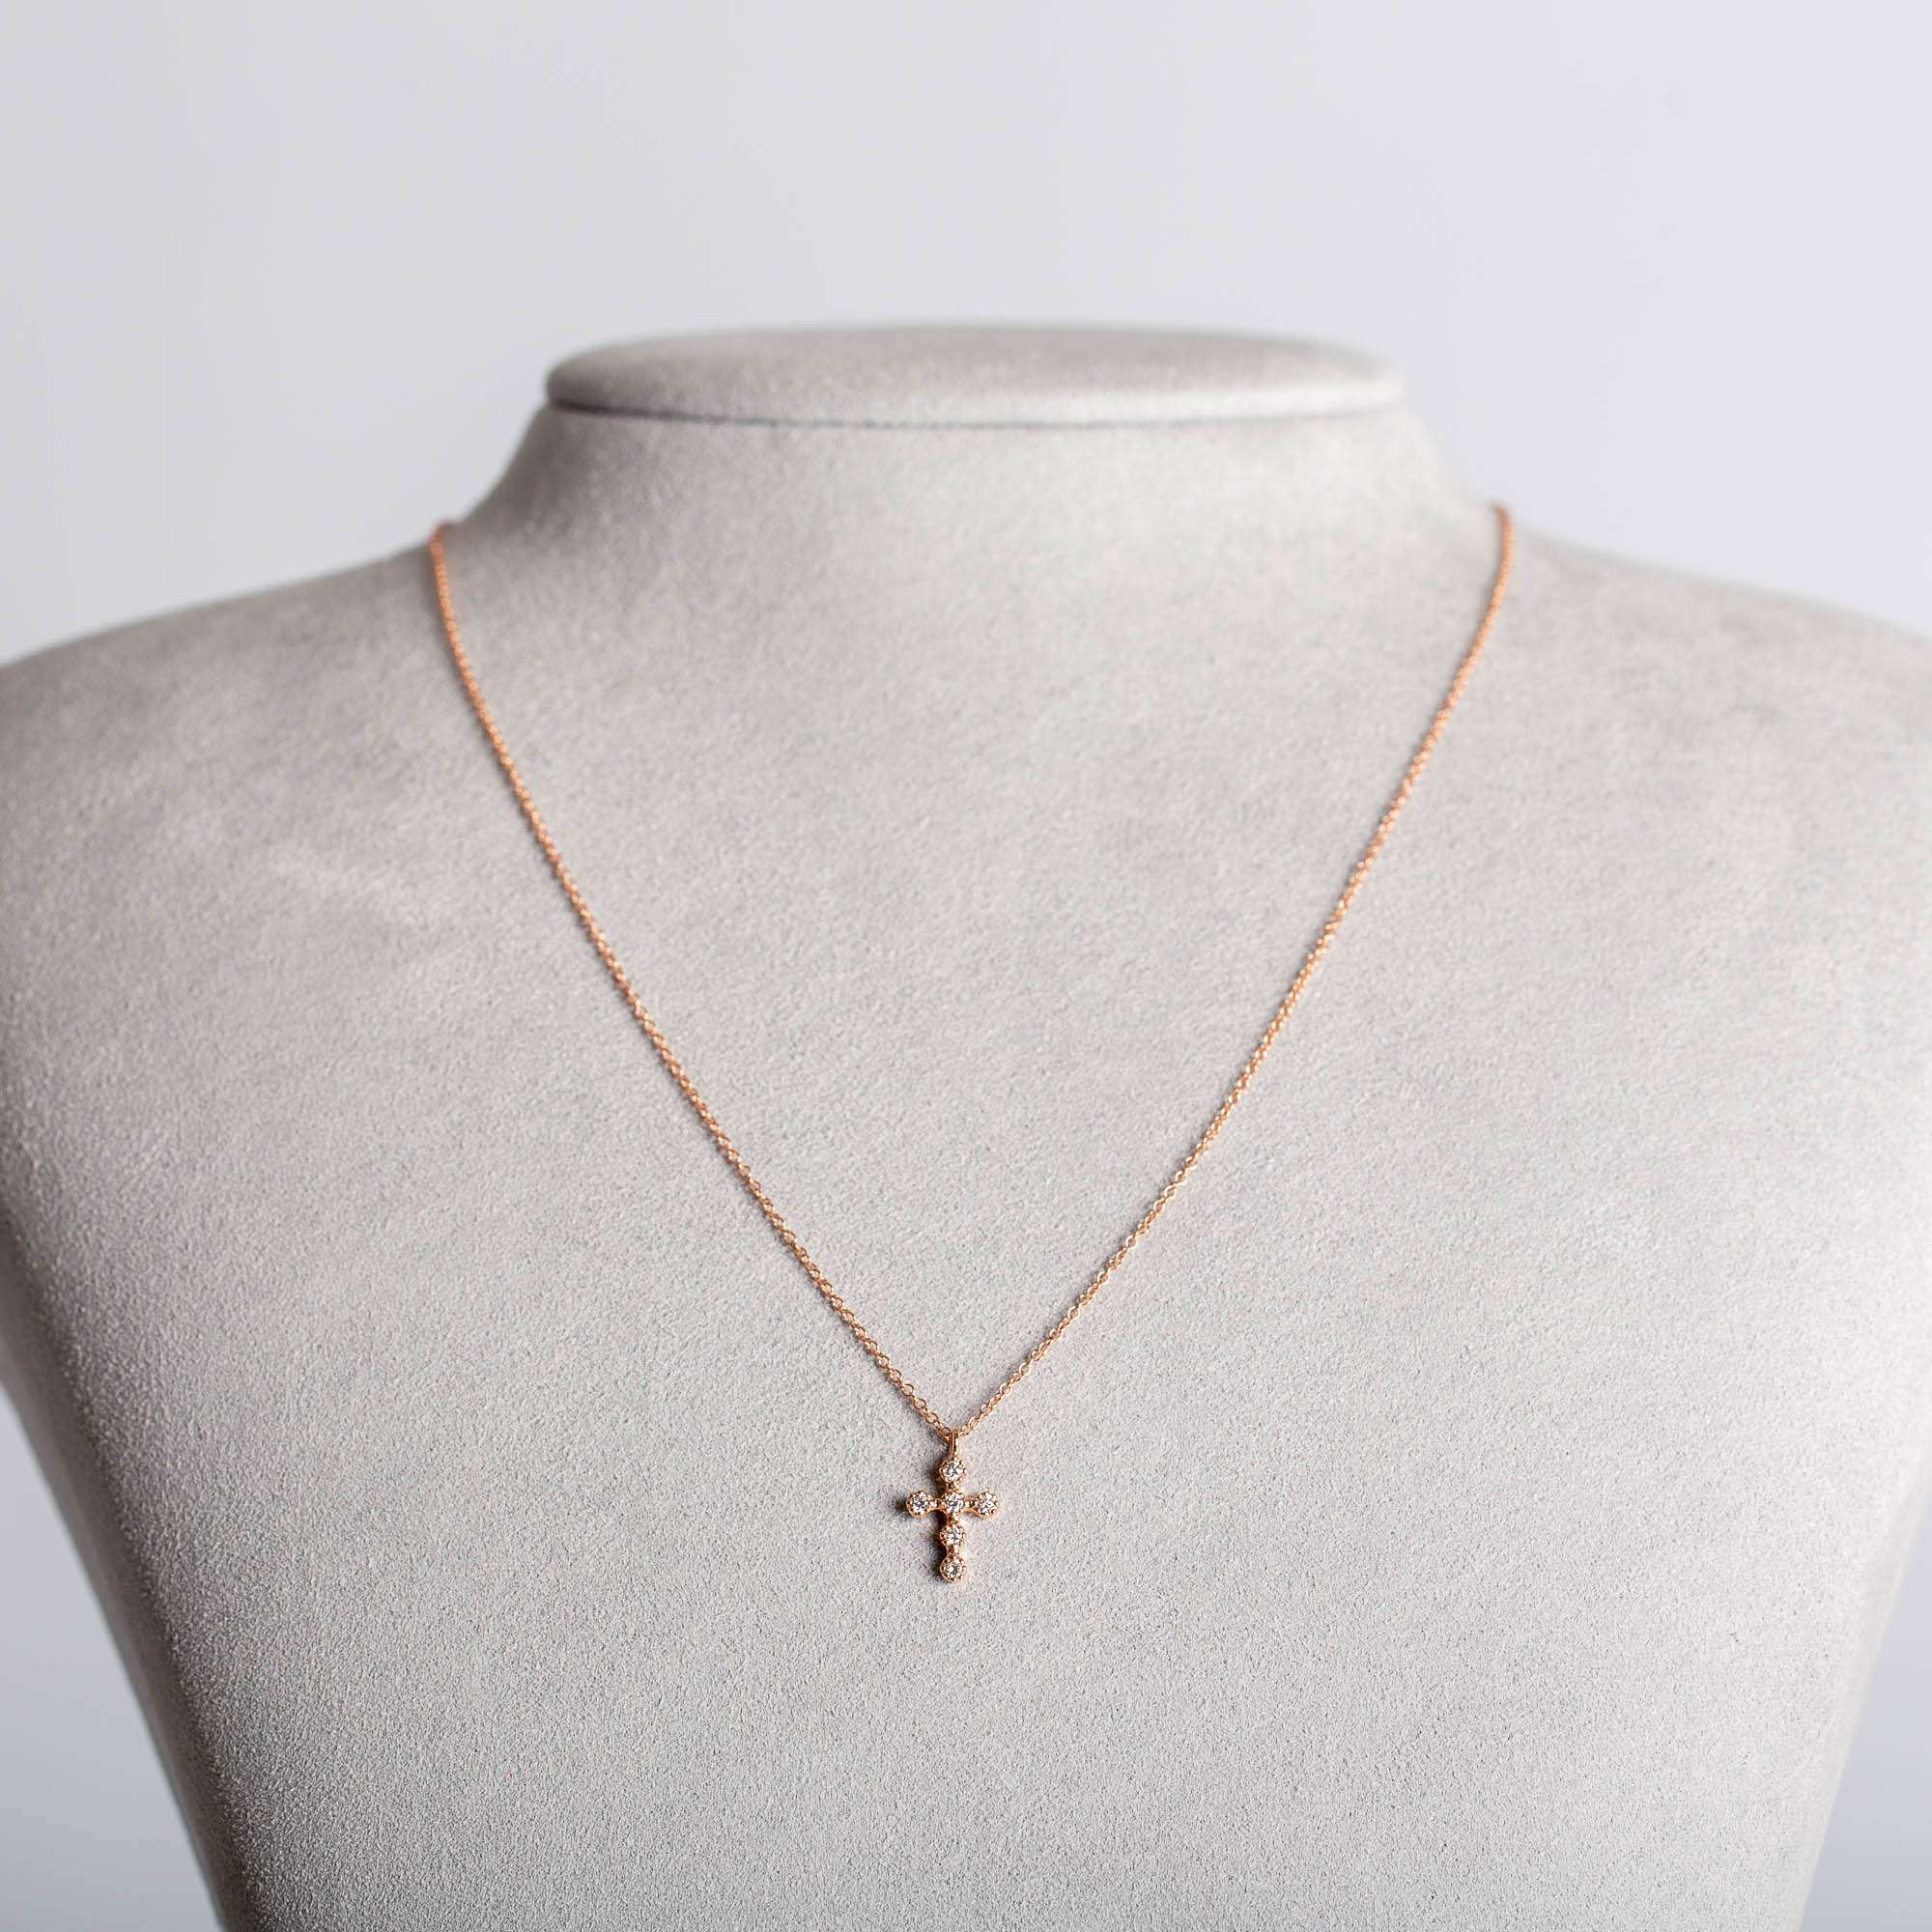 Single Diamond Cross Necklace